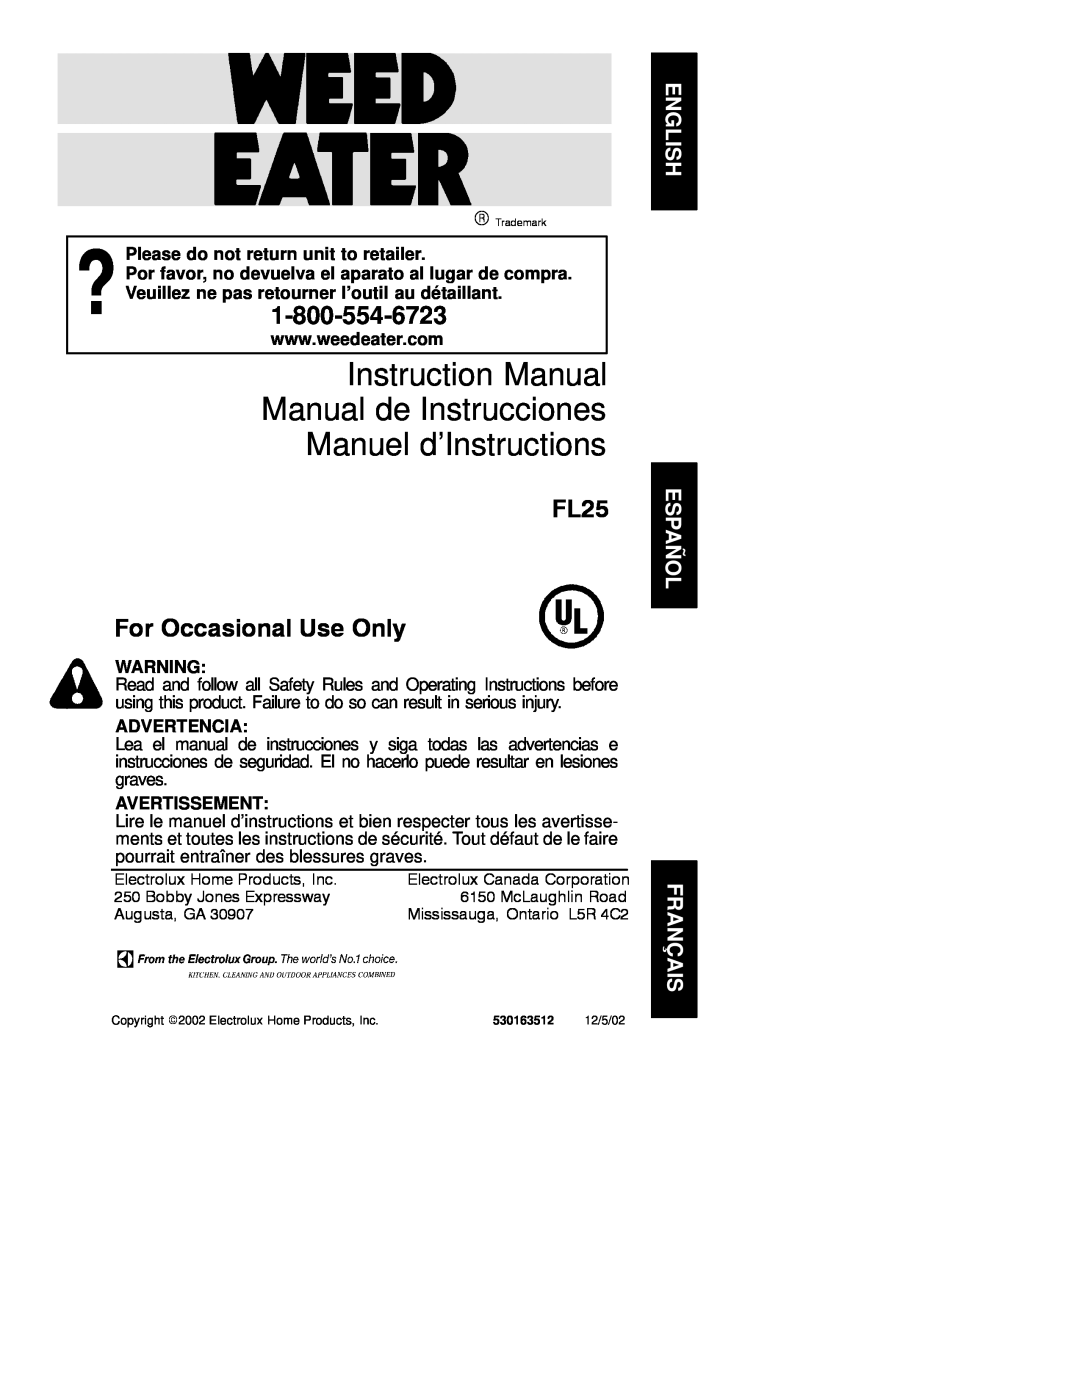 Weed Eater 530163512, FL25 instruction manual Please do not return unit to retailer, Advertencia, Avertissement 